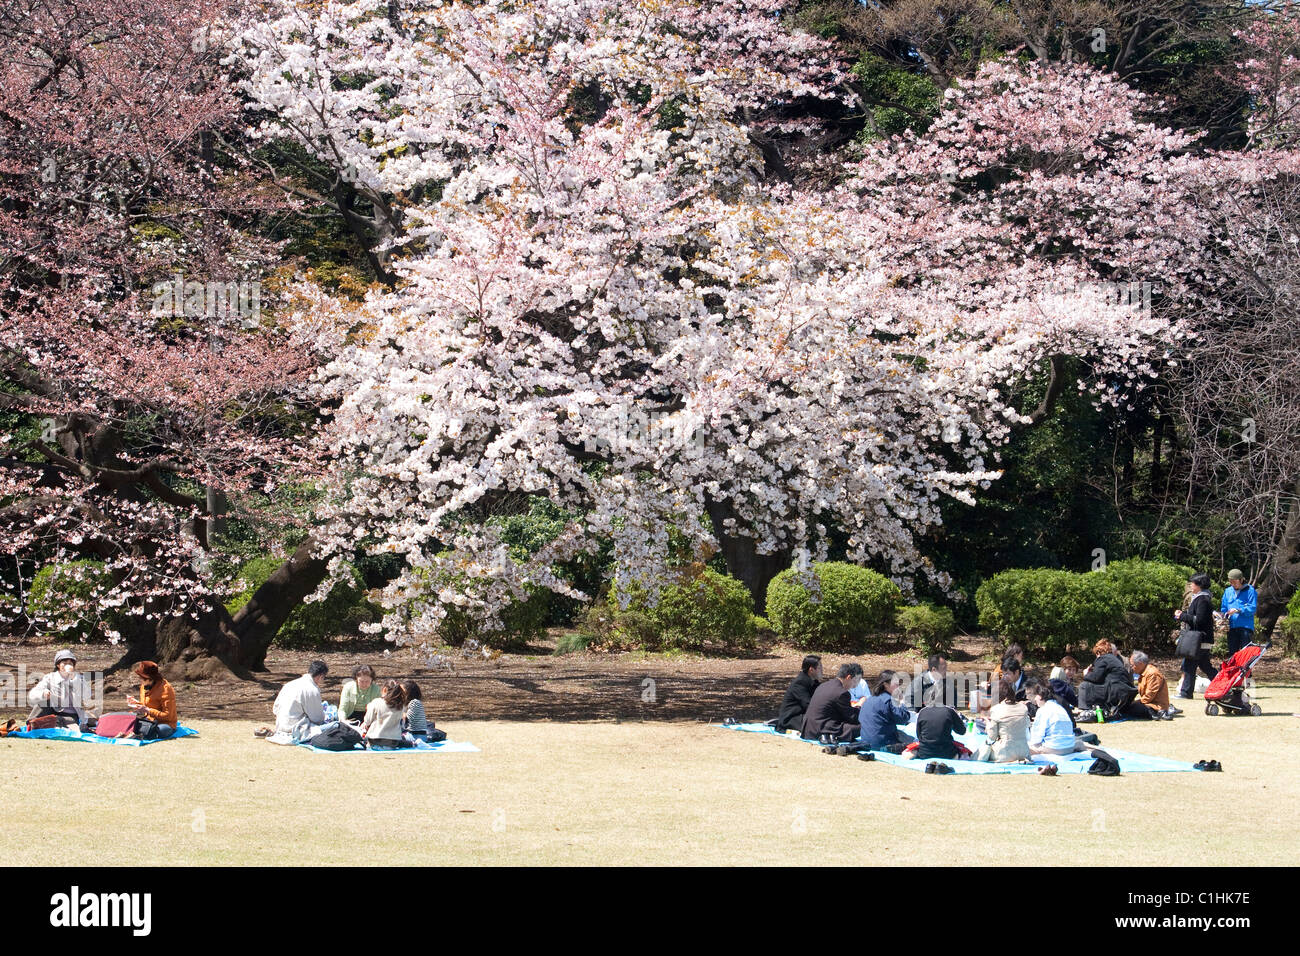 TOKYO, JAPAN - APRIL 2 2009: Cherry blossom celebration (called hanami) at Tokyo park on April 5, 2009 in Tokyo, Japan. Stock Photo